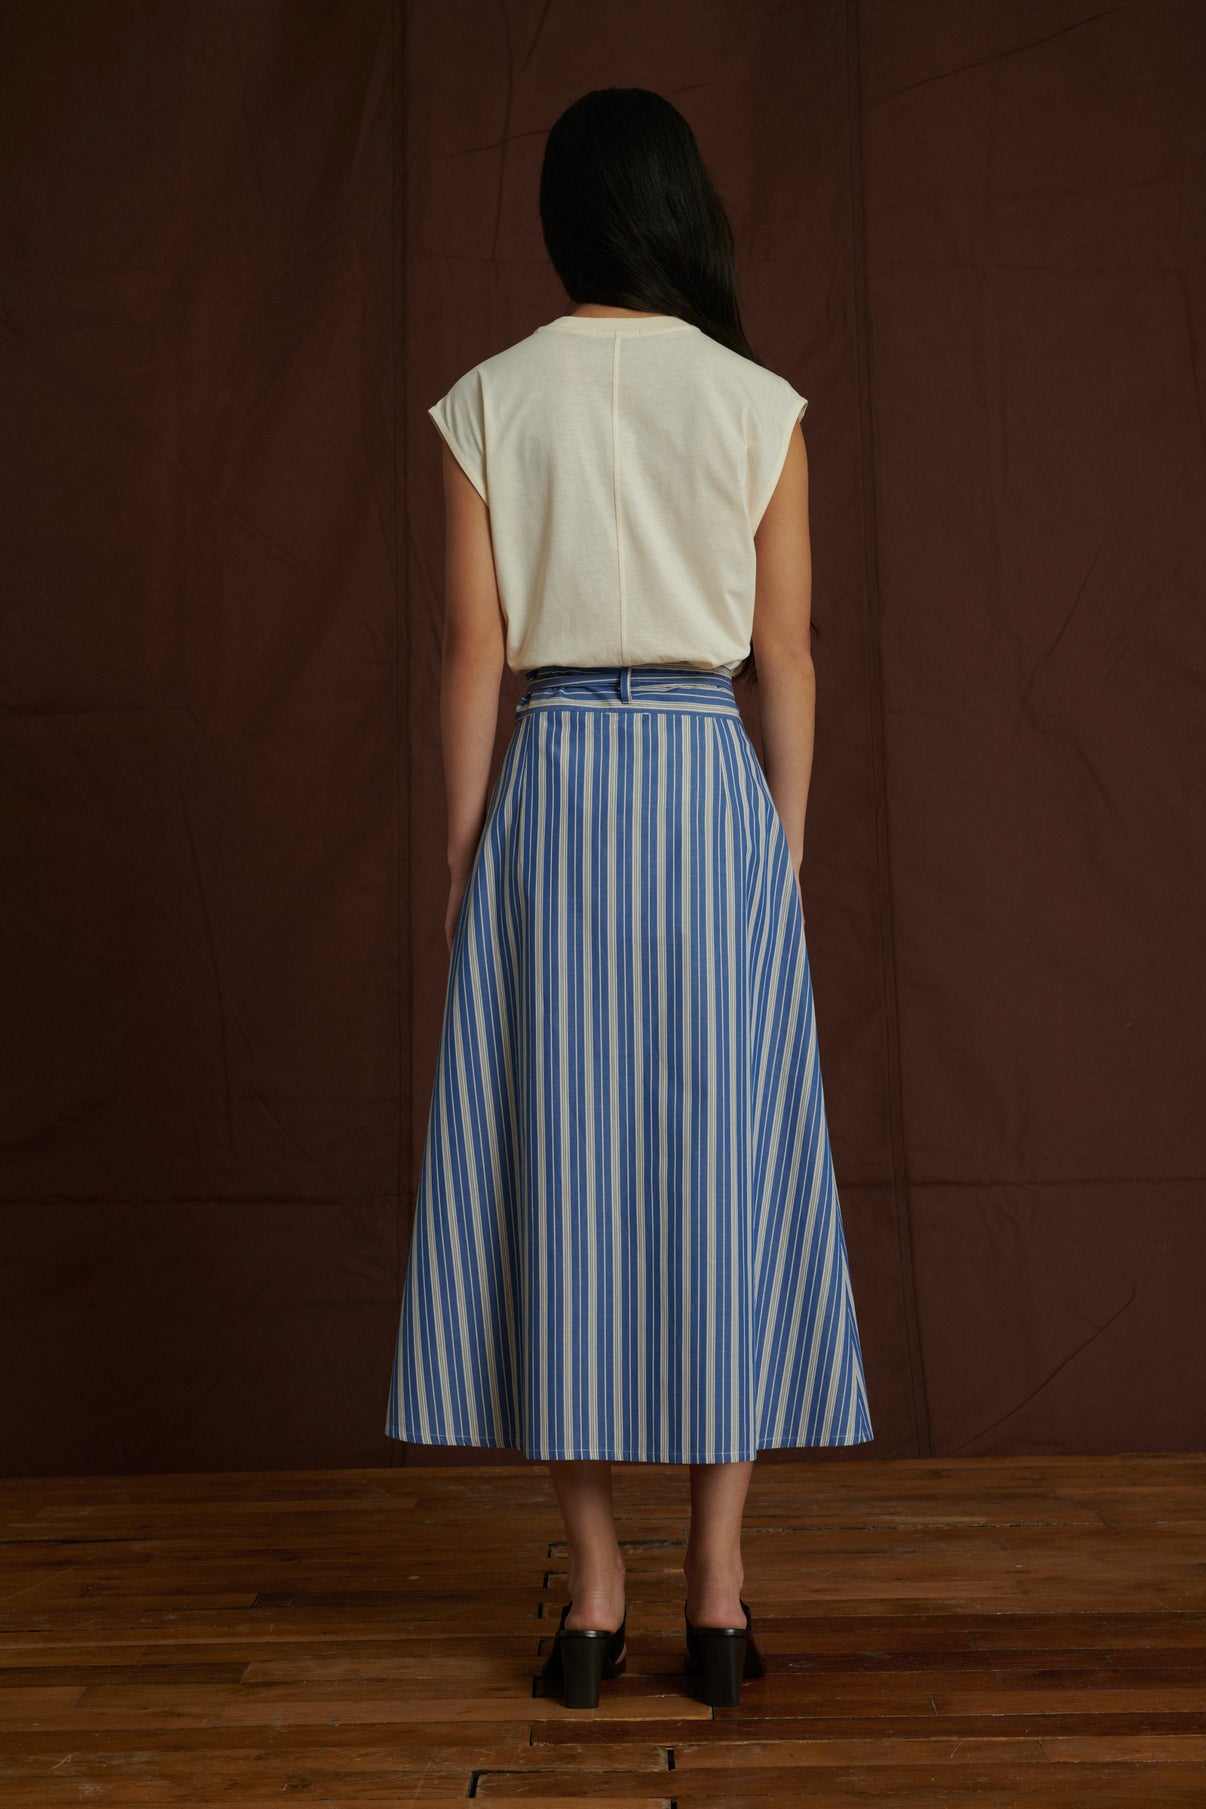 Jupe Reine - Bleu/Blanc - Coton - Femme vue 2